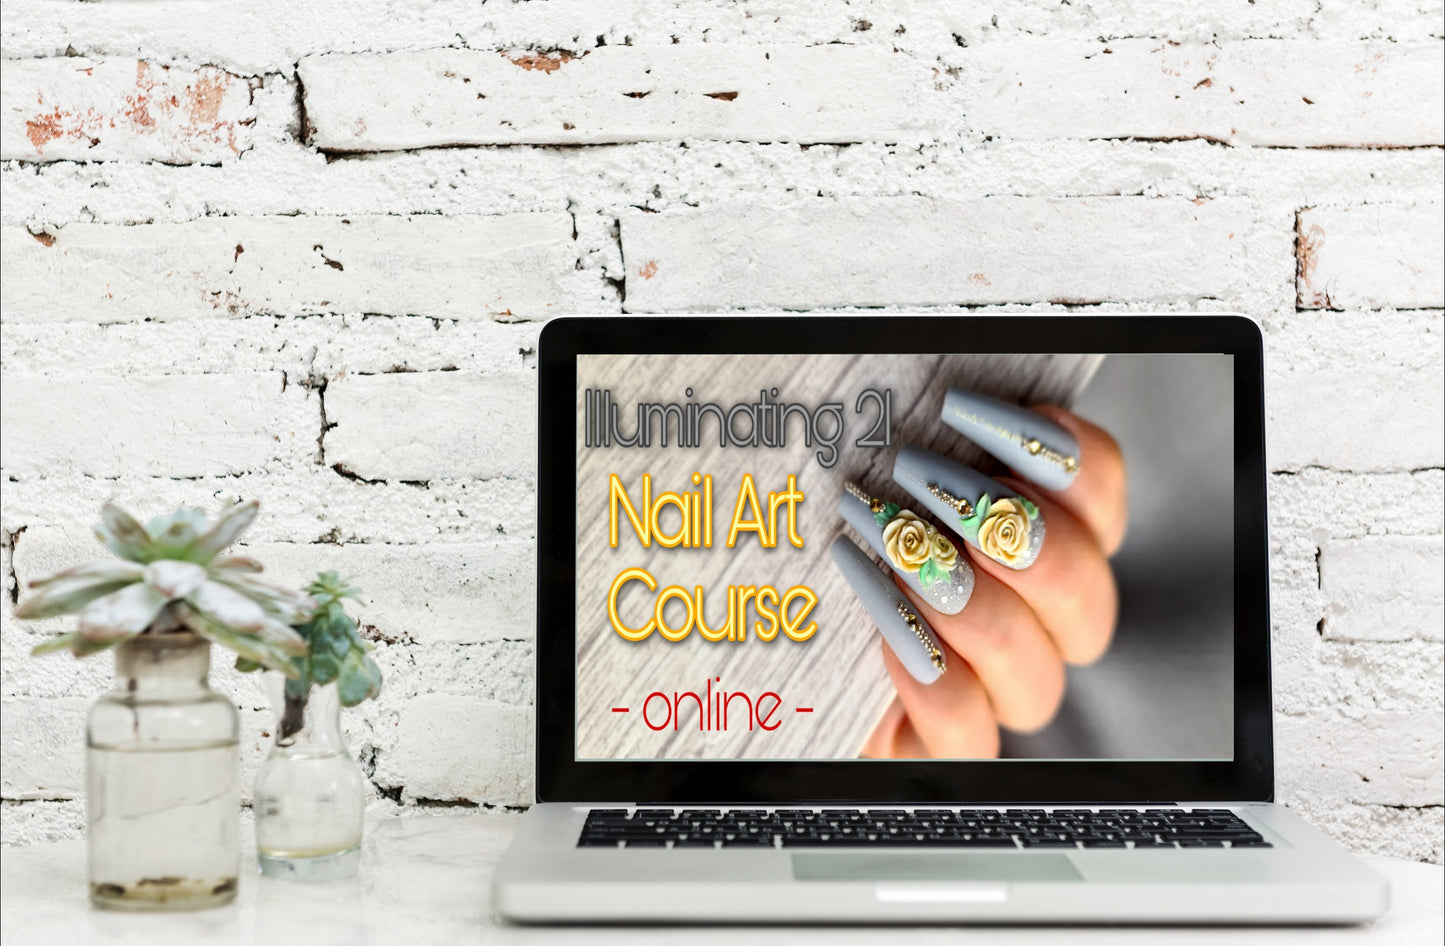 Illuminating 21 Nail Art Course - online -